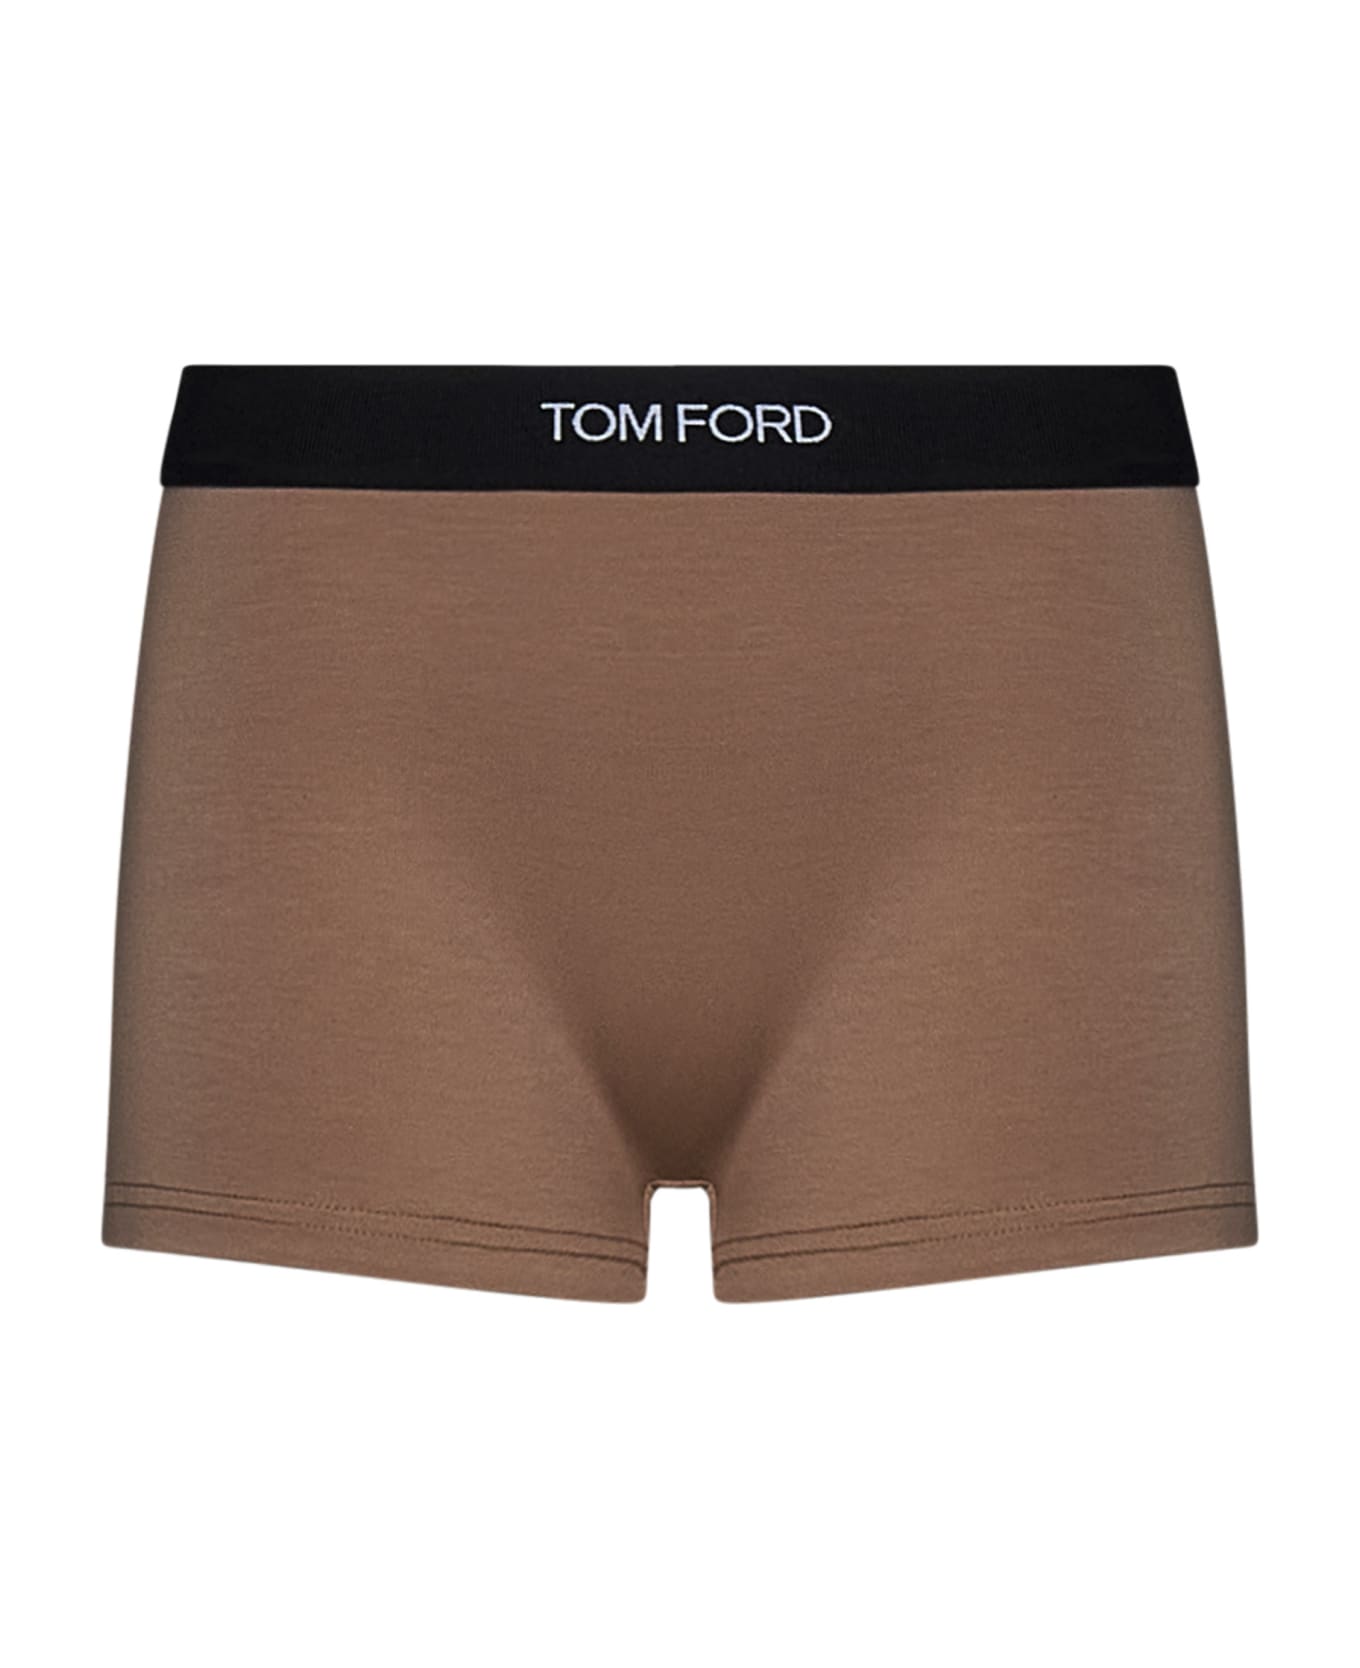 Tom Ford Bottom - Pink